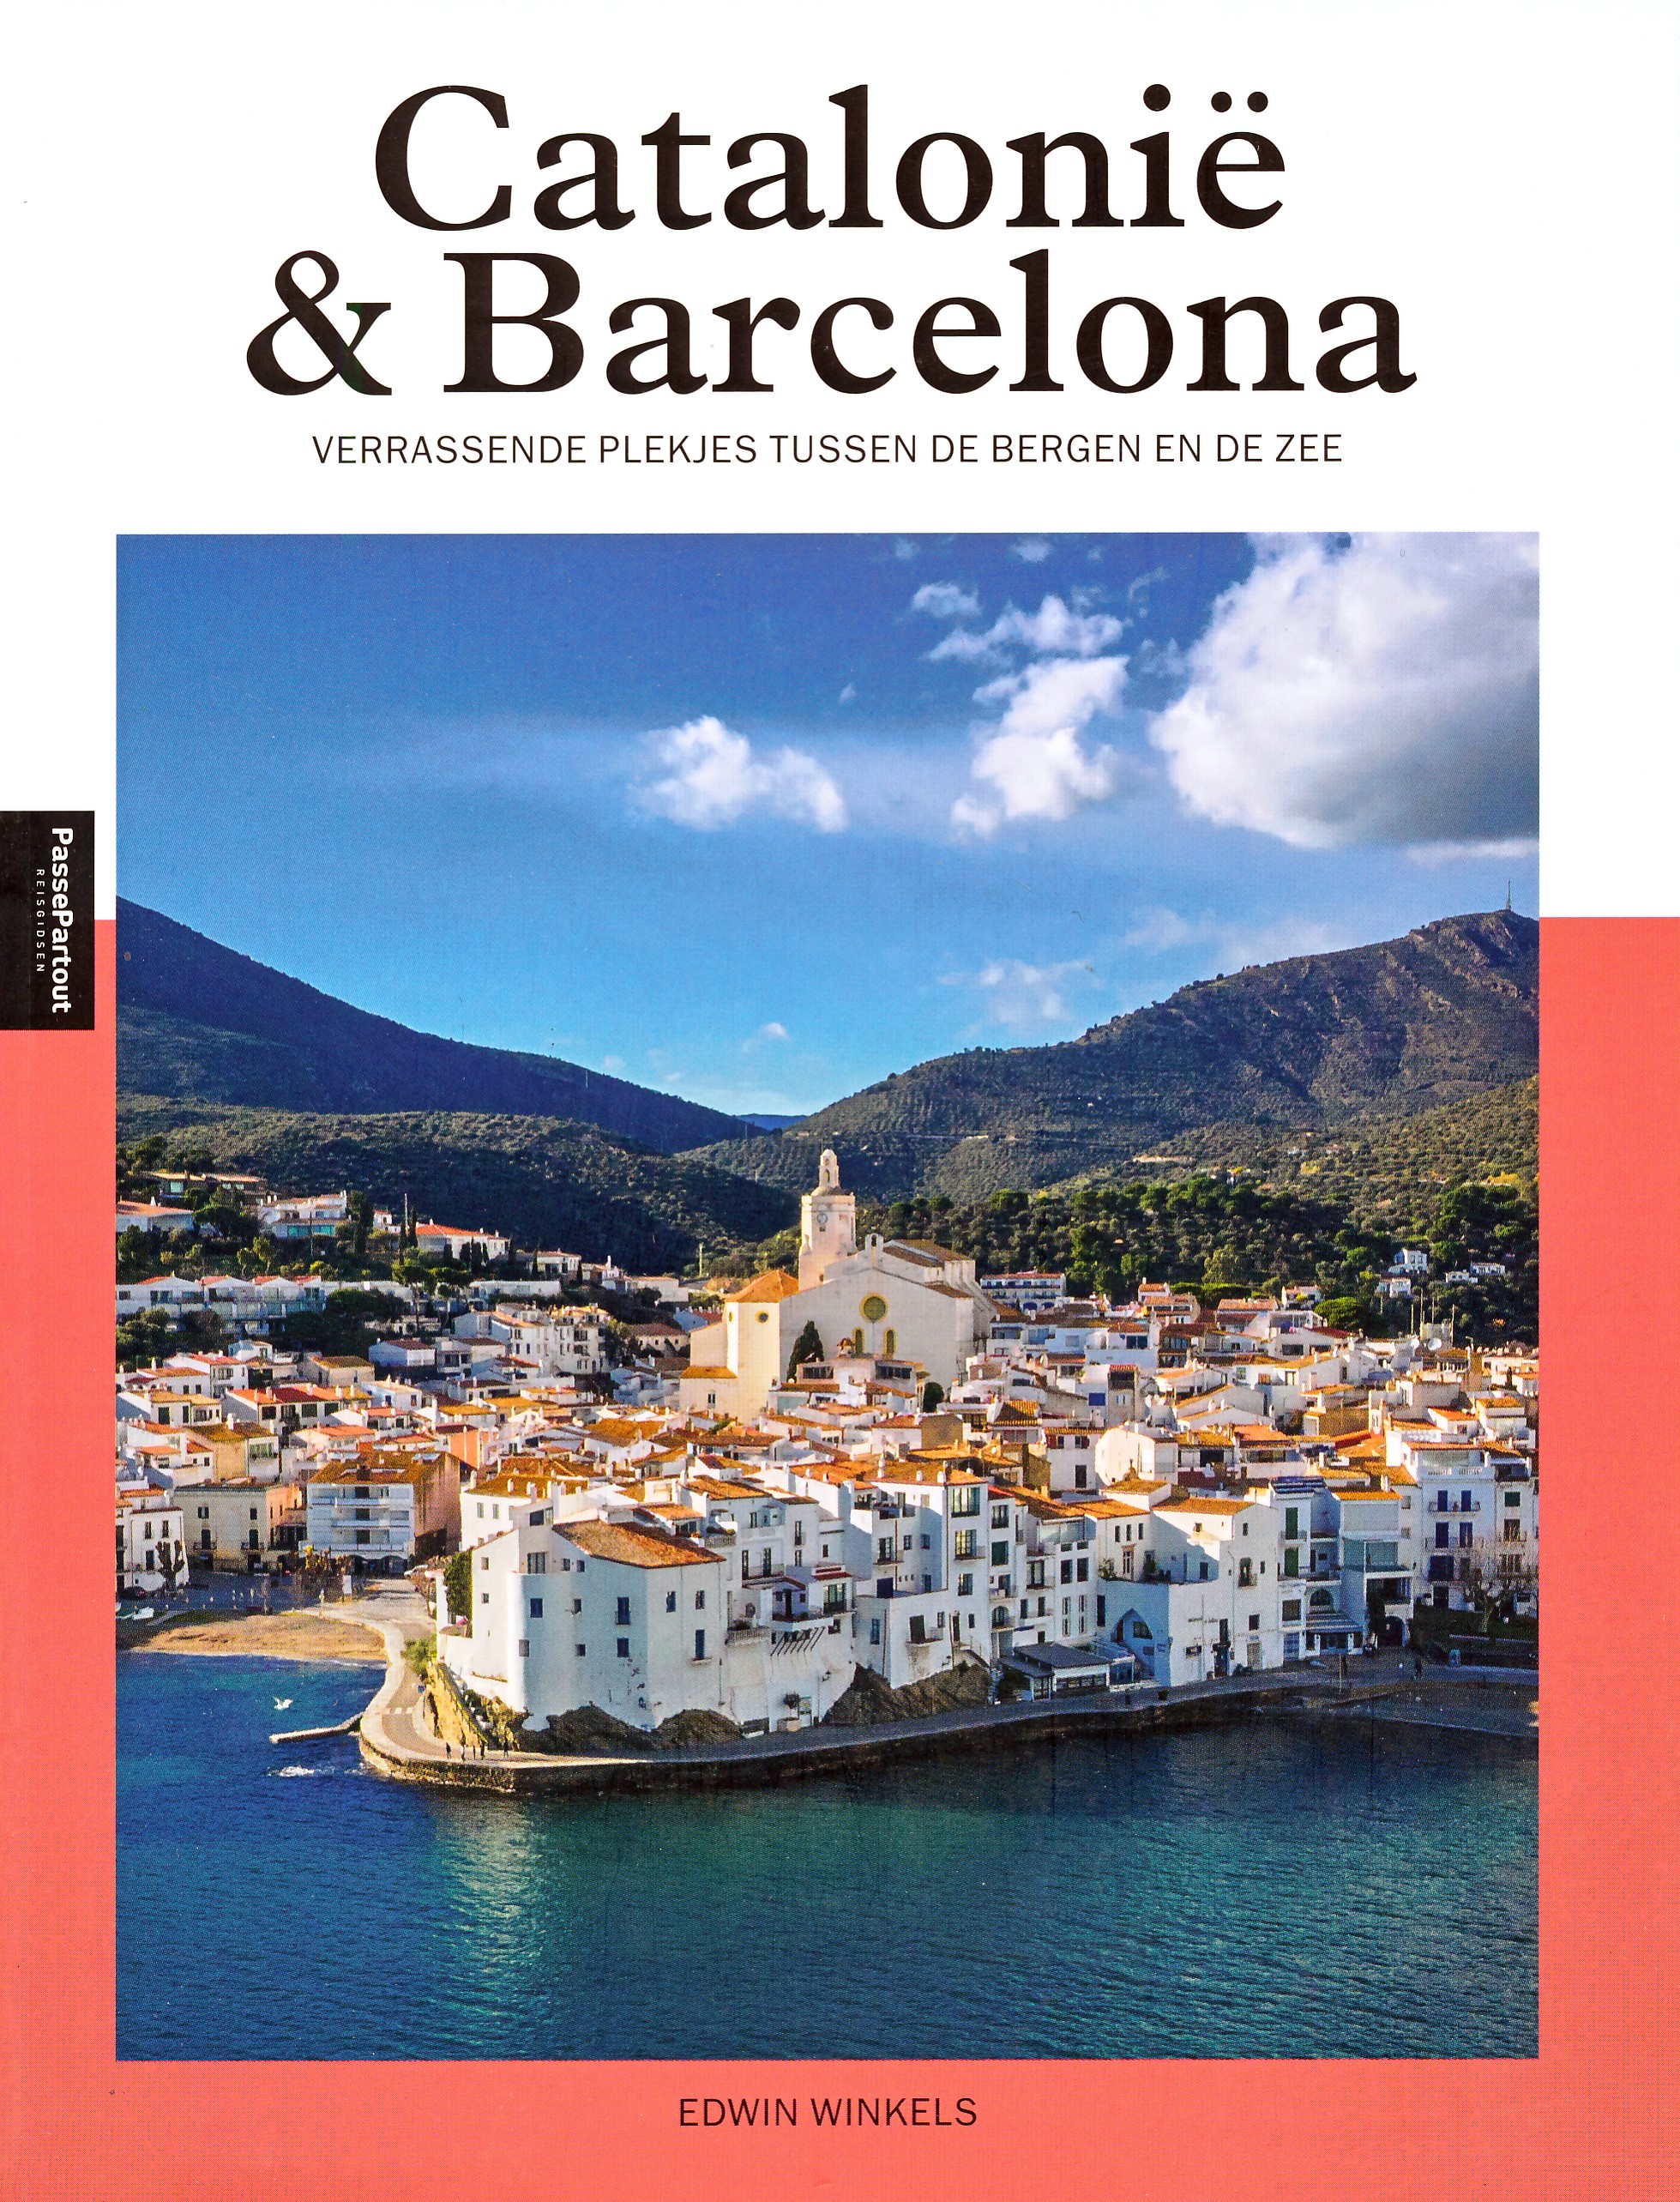 Online bestellen: Reisgids Catalonië & Barcelona | Edicola